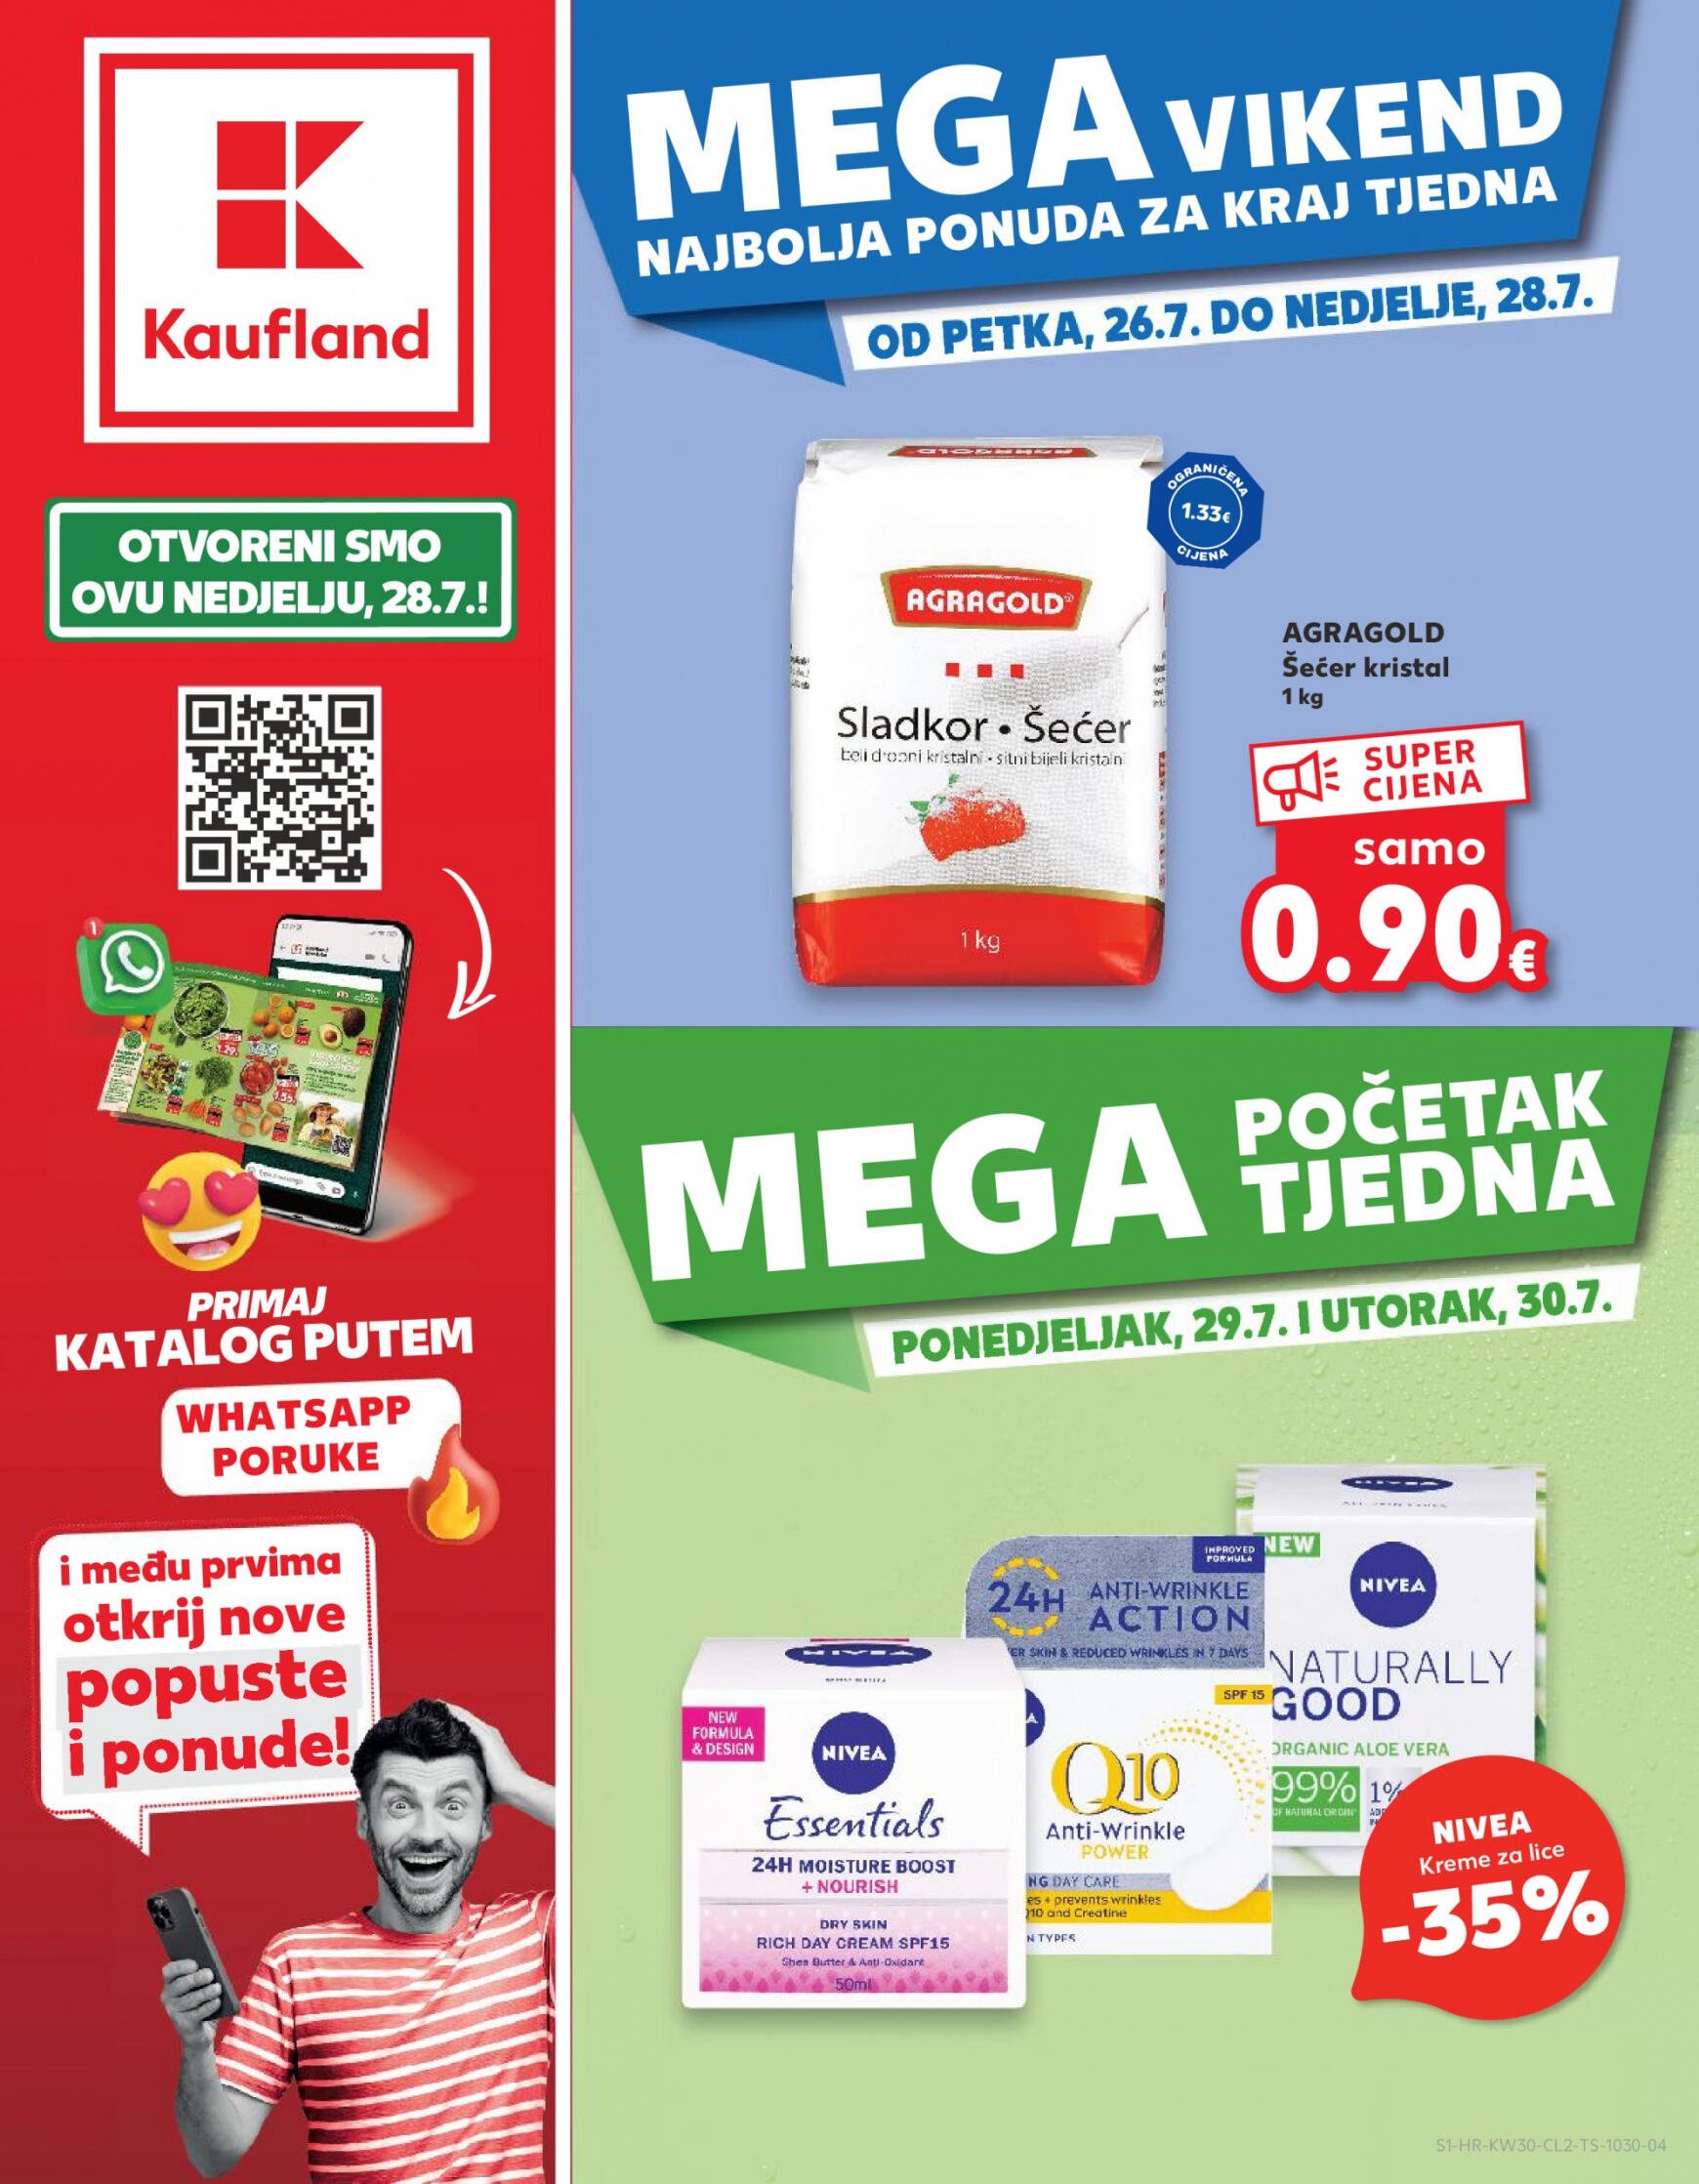 kaufland - Novi katalog Kaufland - Mega Vikend 26.07. - 28.07.